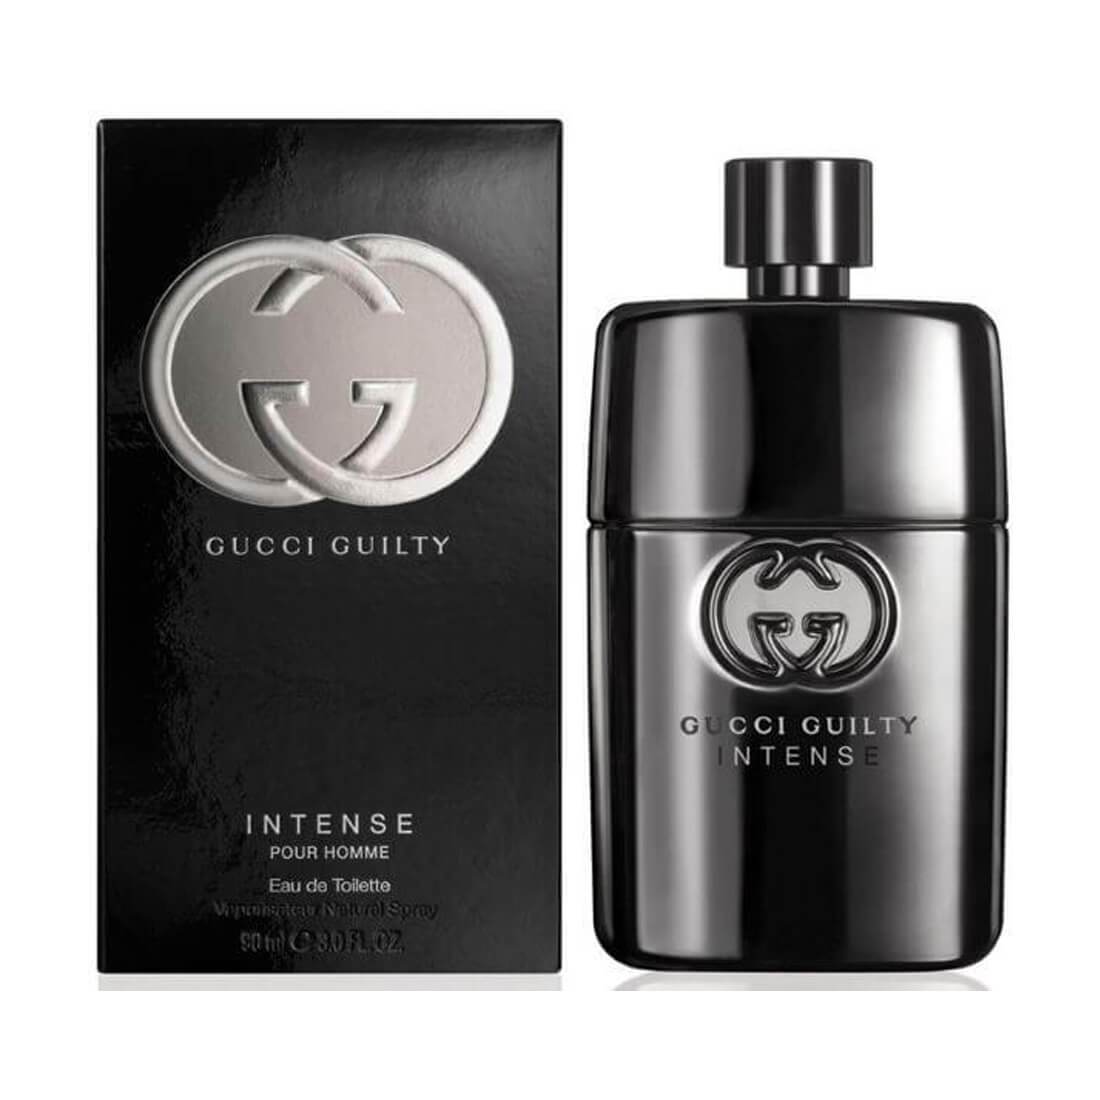 Gucci Guilty Intense Pour Homme Perfume For Men - 90ml